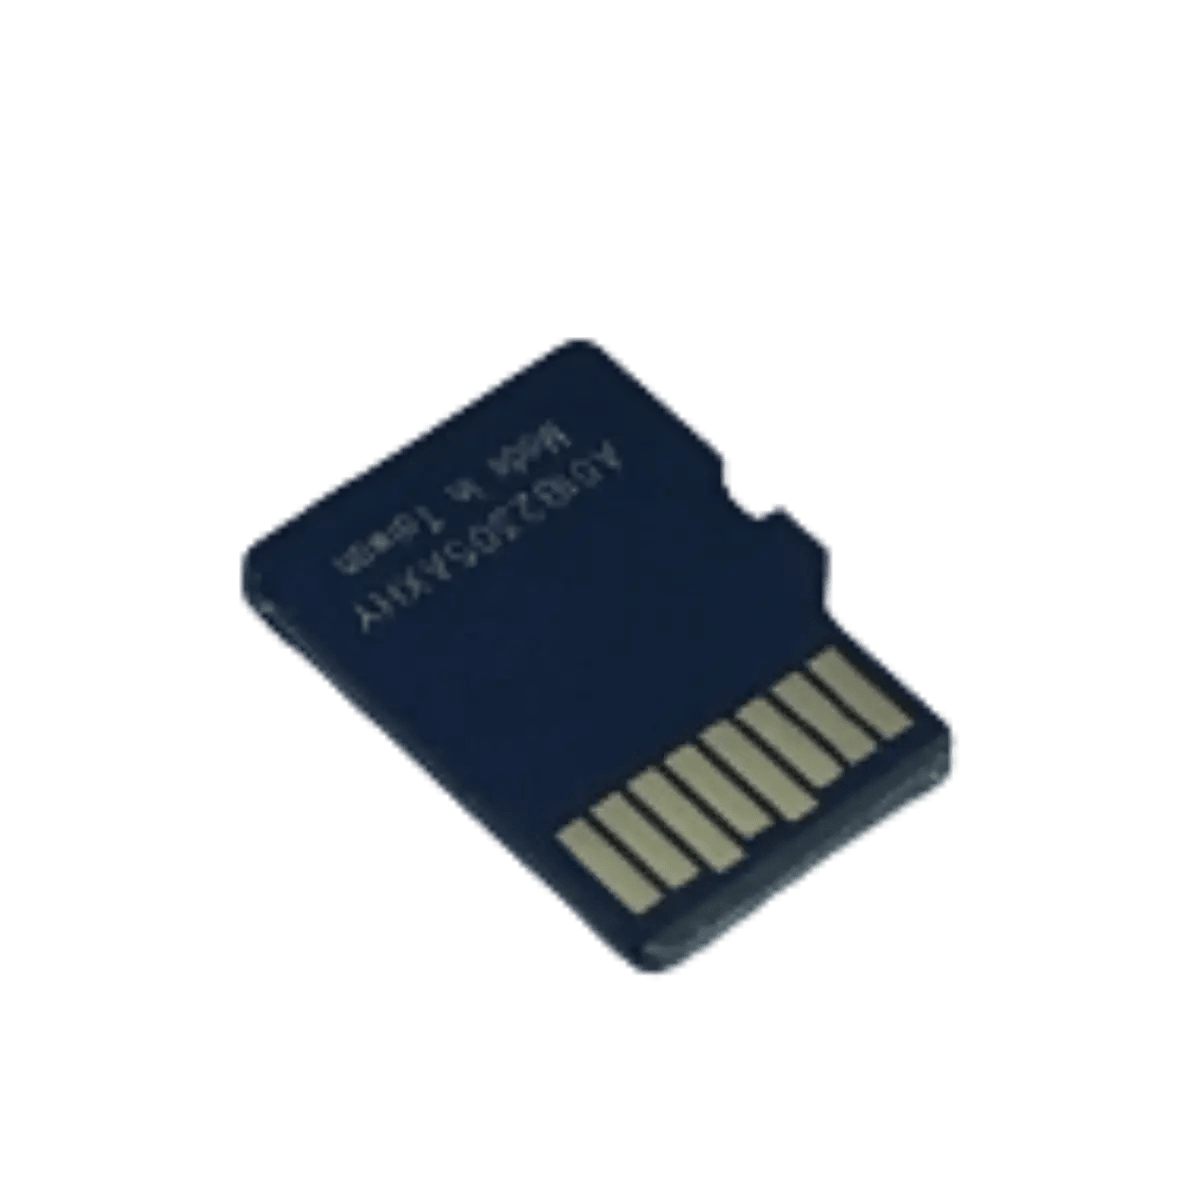 Carte mémoire psp sandisk 2GB magicgate bleu